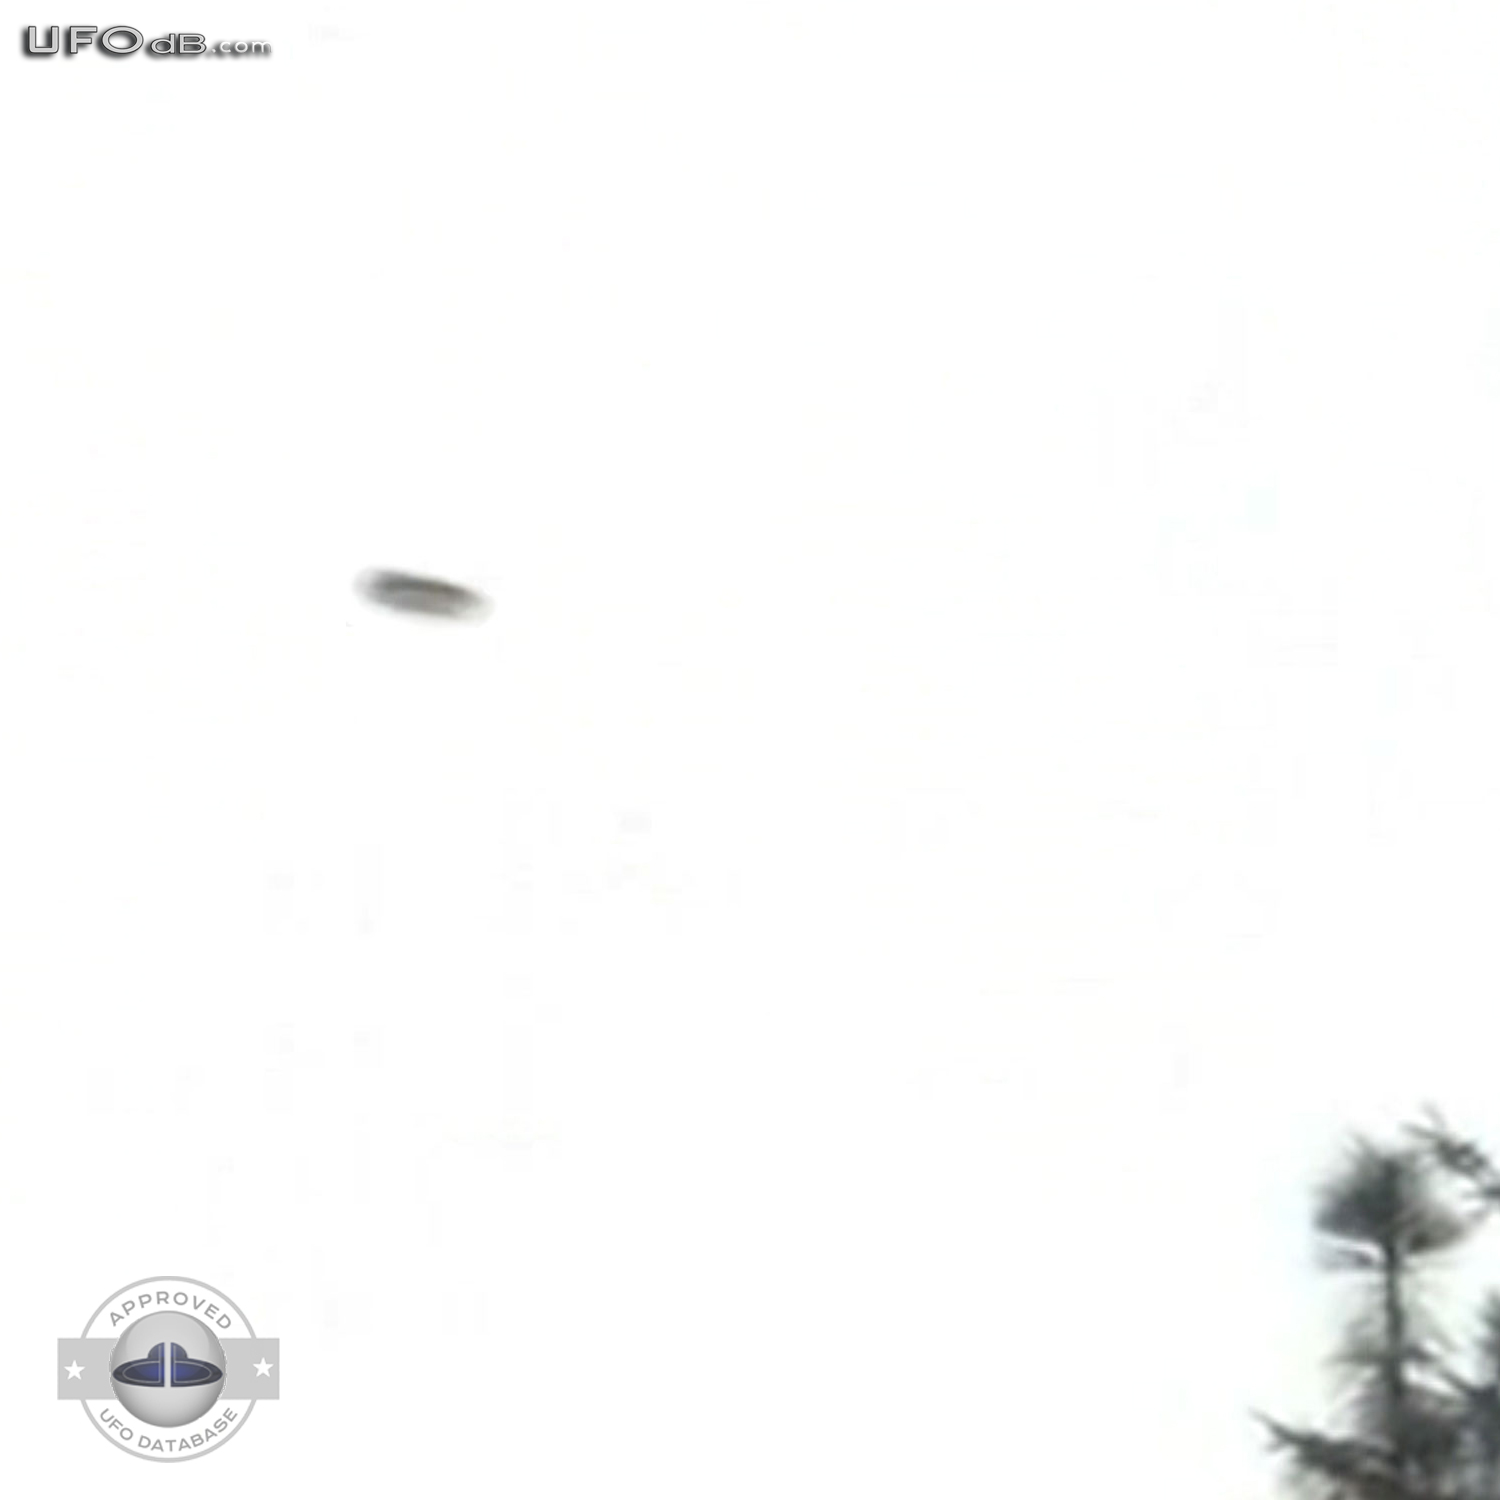 Camera test captures UFO in the sky in Mimon, Liberec, Czech Republic UFO Picture #371-3